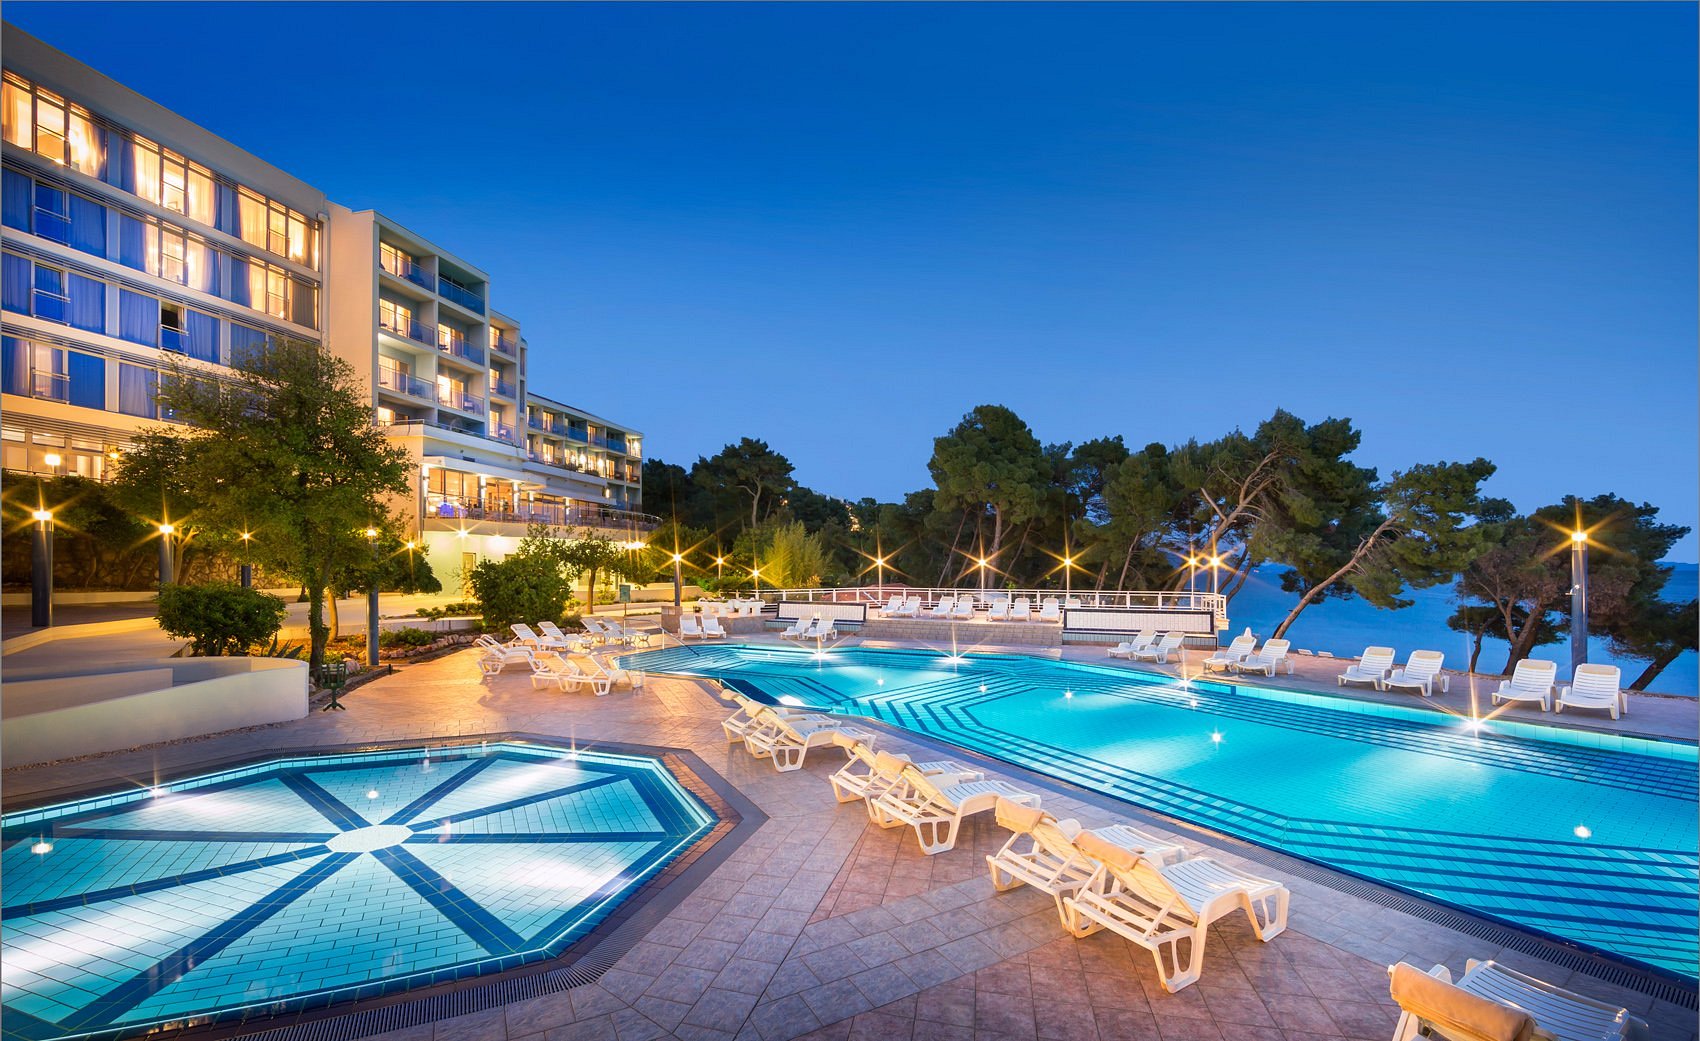 Azur promilia. Aminess. Azur Hotel. Montenegro Azur Hotel. Самый большой бассейн на Ближнем востоке Grand Azur;.